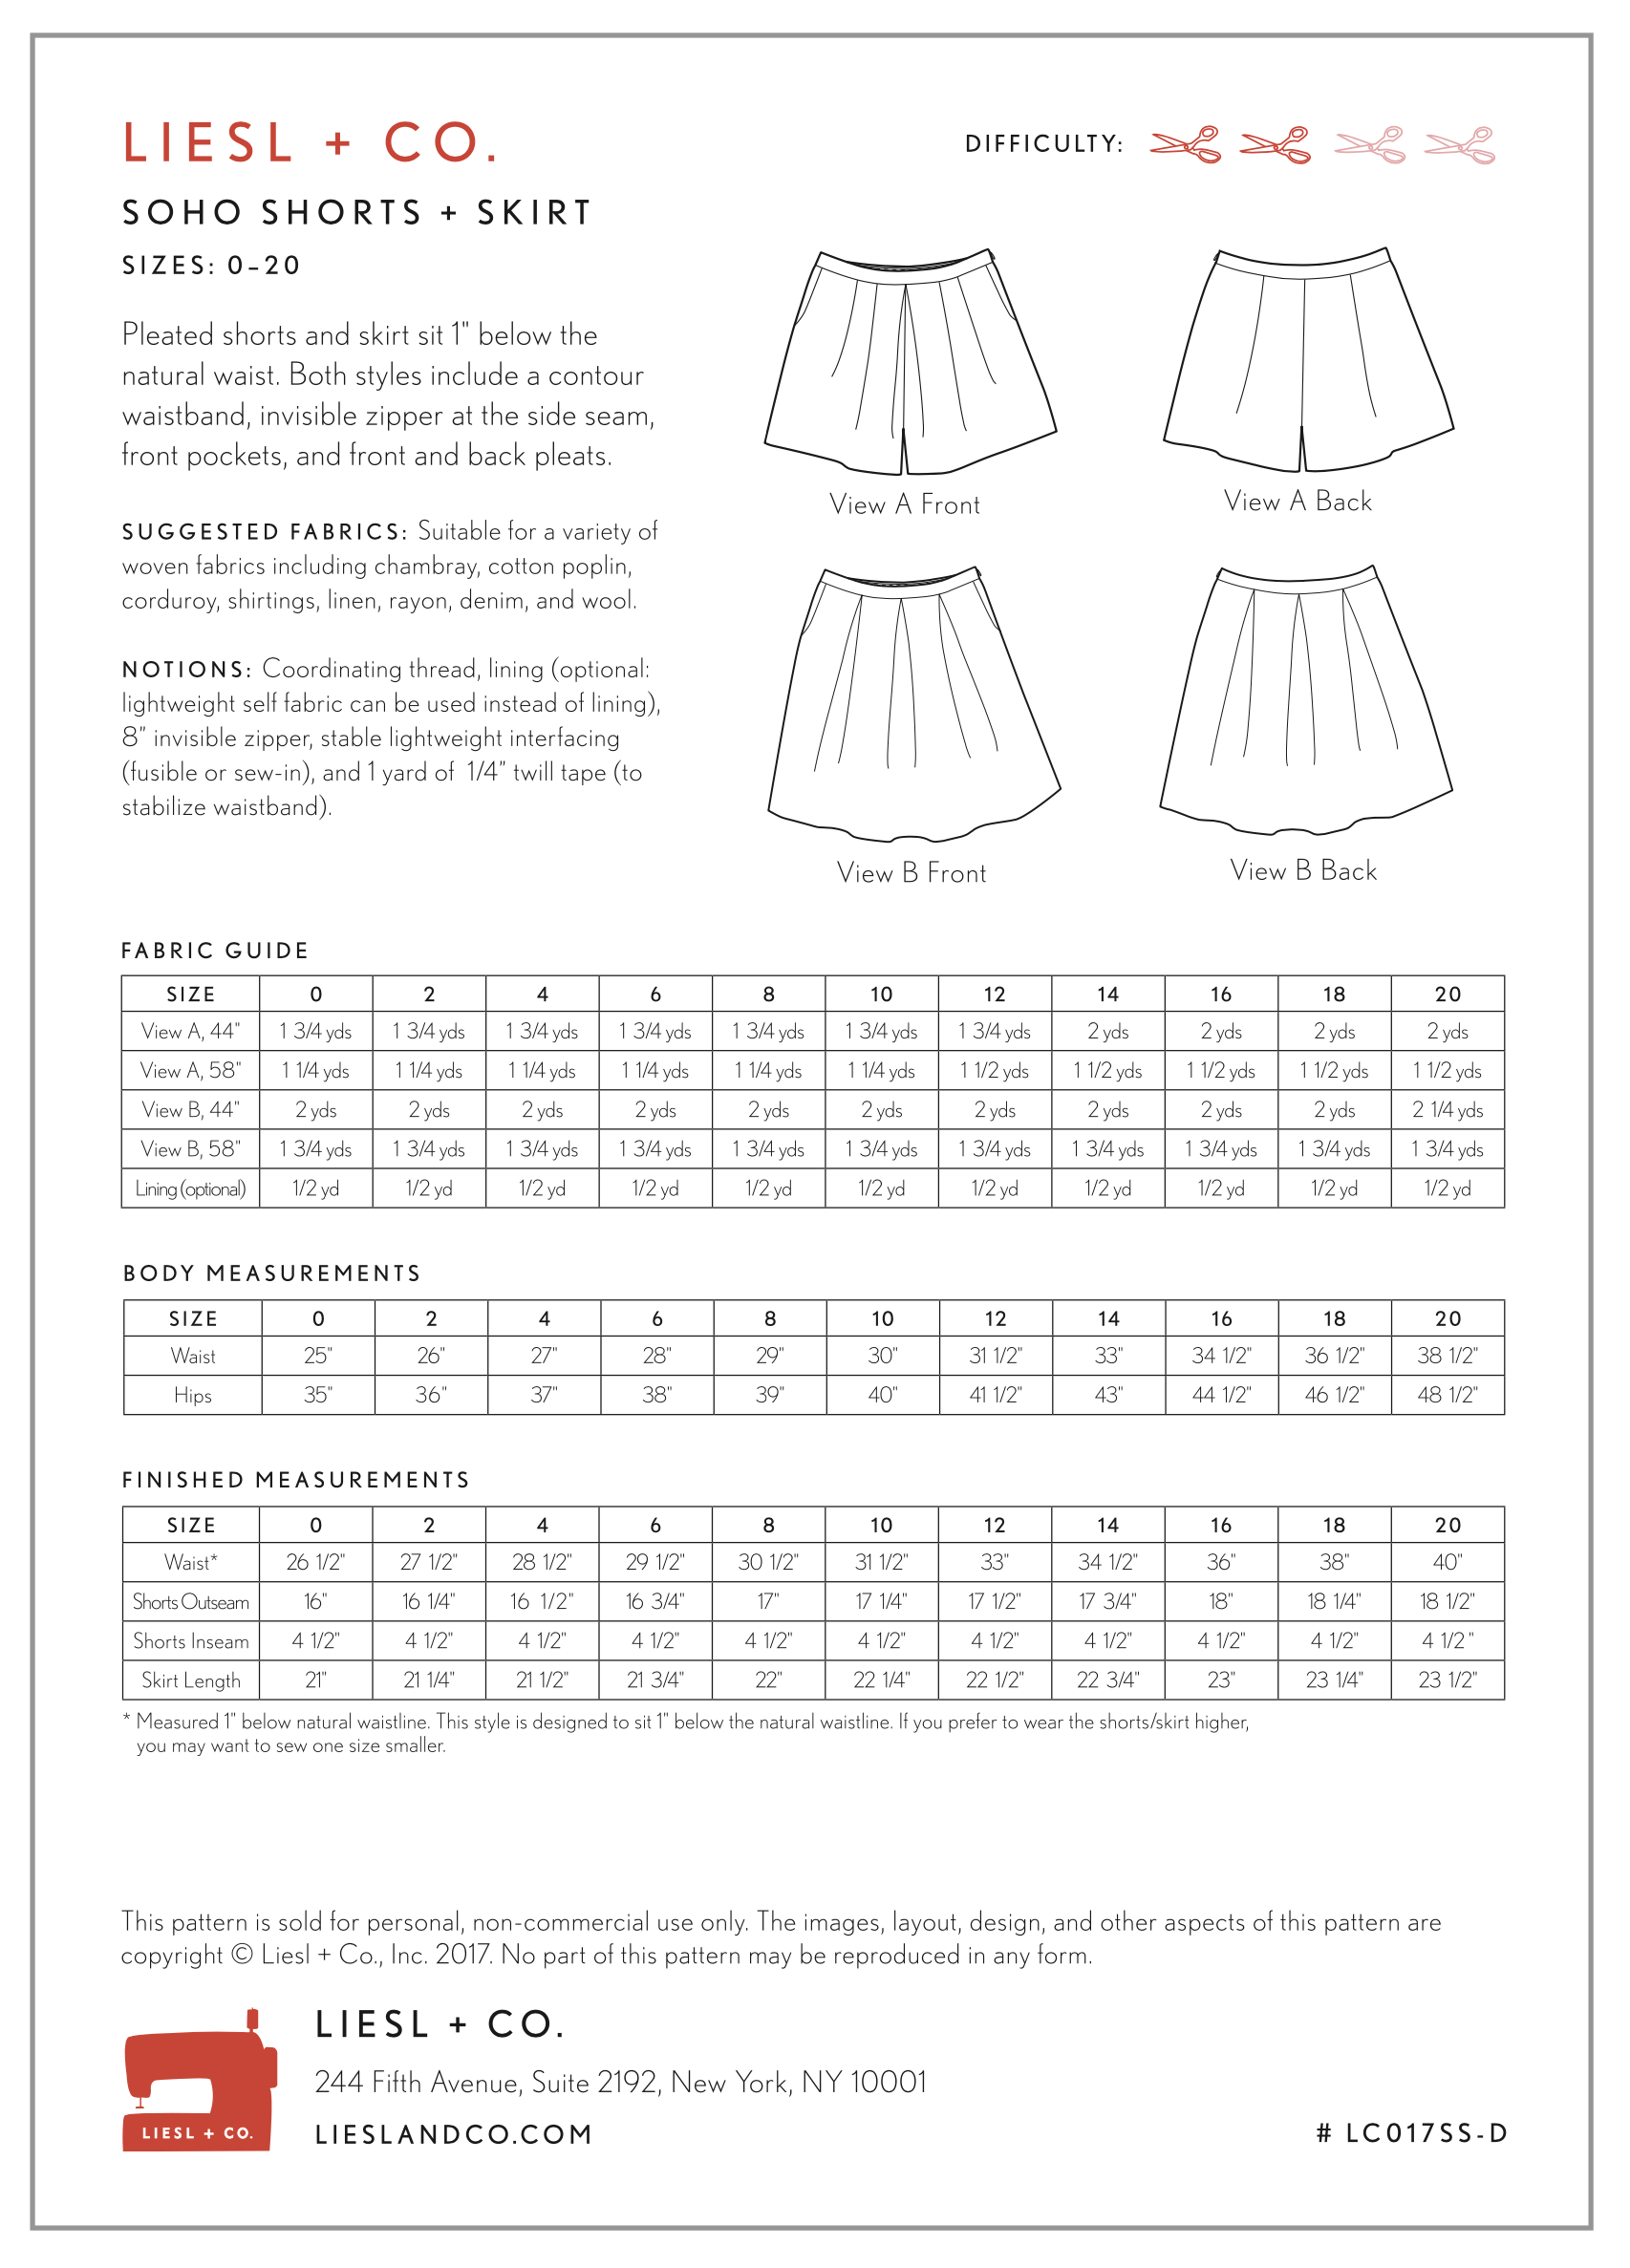 Liesl + Co Soho Shorts and Skirt - The Fold Line